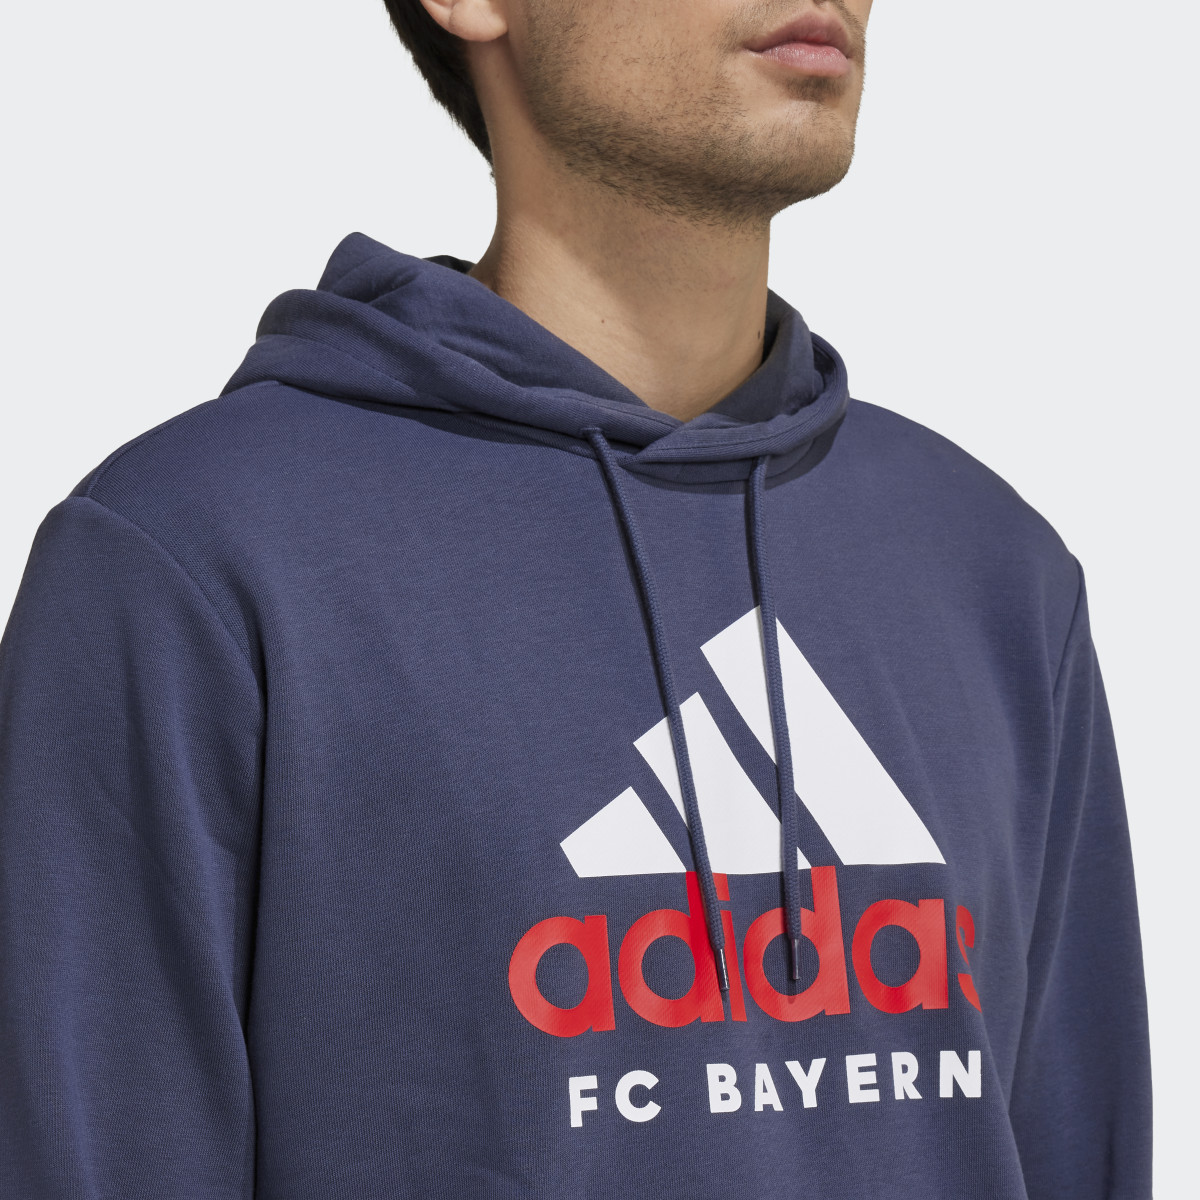 Adidas FC Bayern DNA Graphic Hoodie. 6